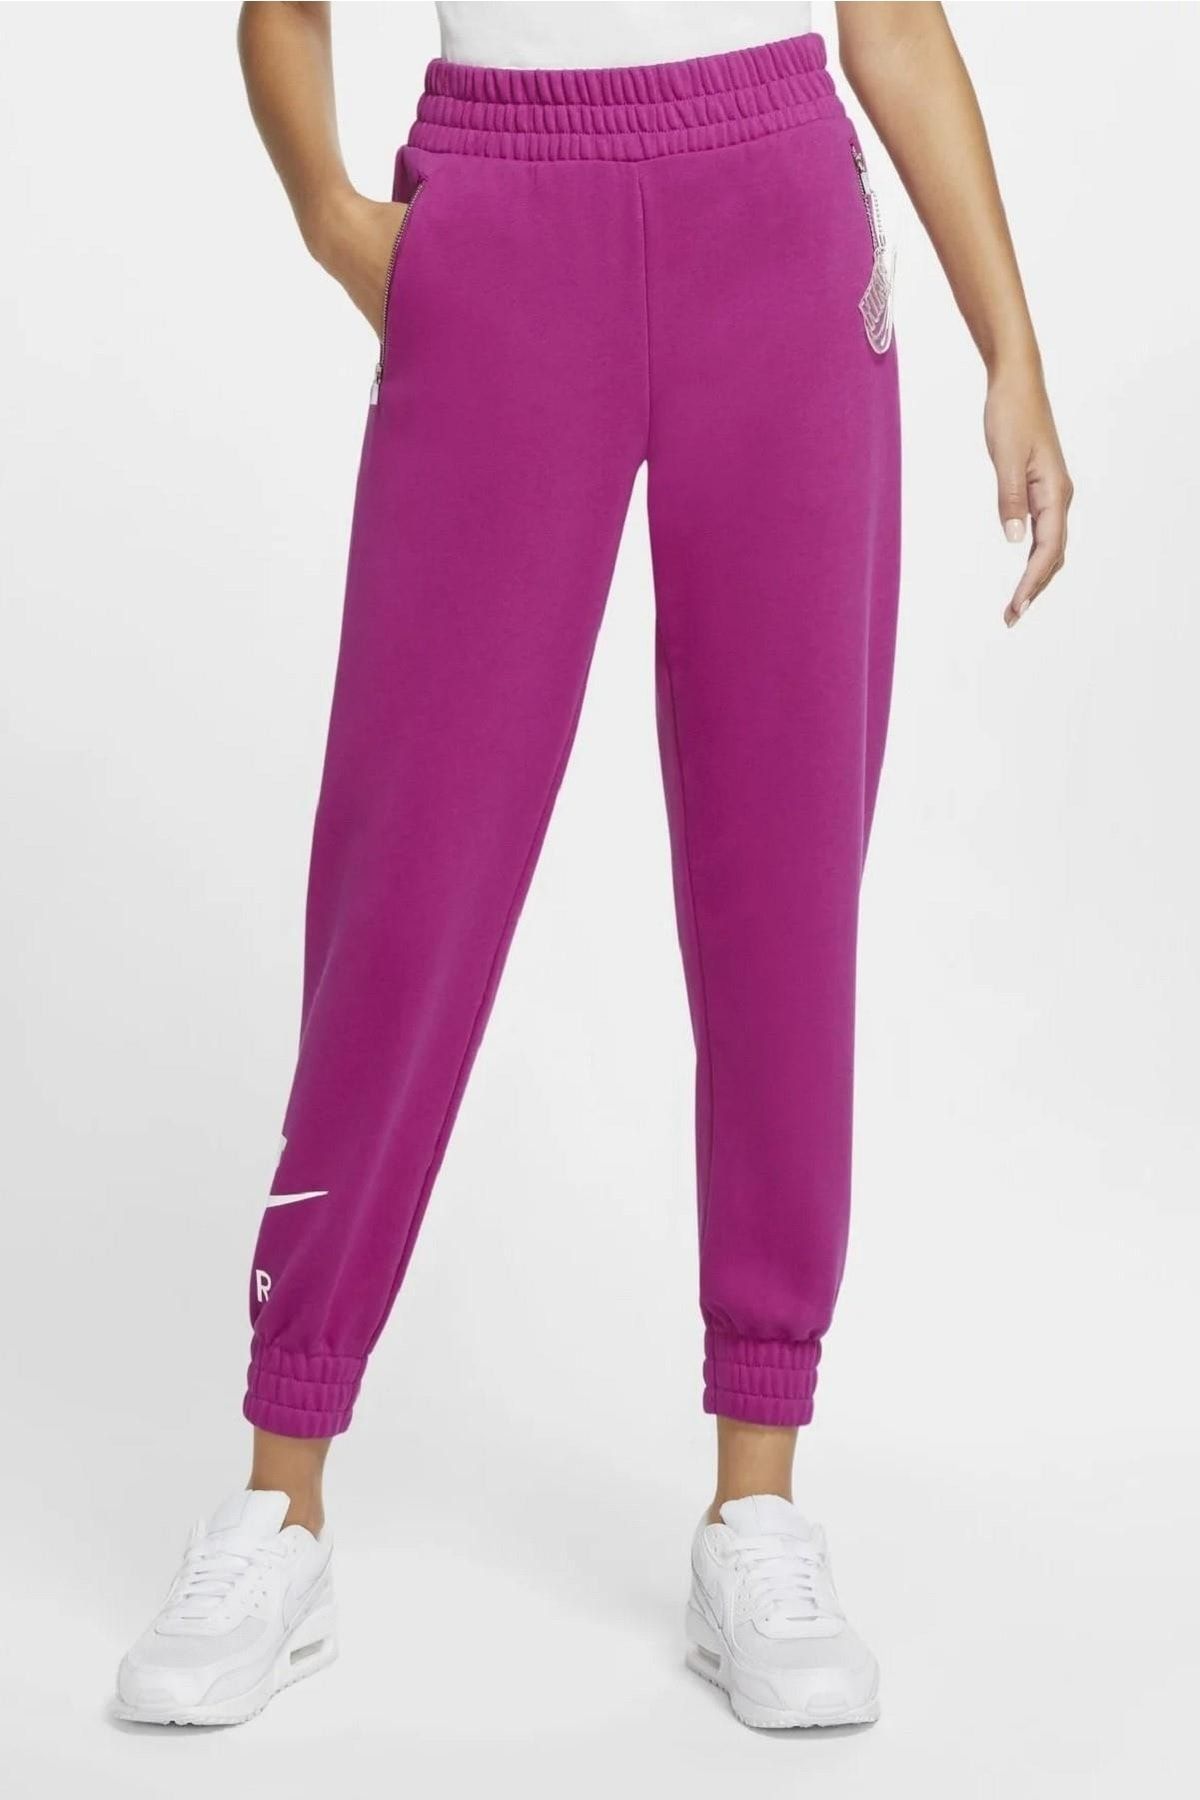 Nike Air Fleece Pants Fuşya Renk Rahat Kalıp Eşofman Altı